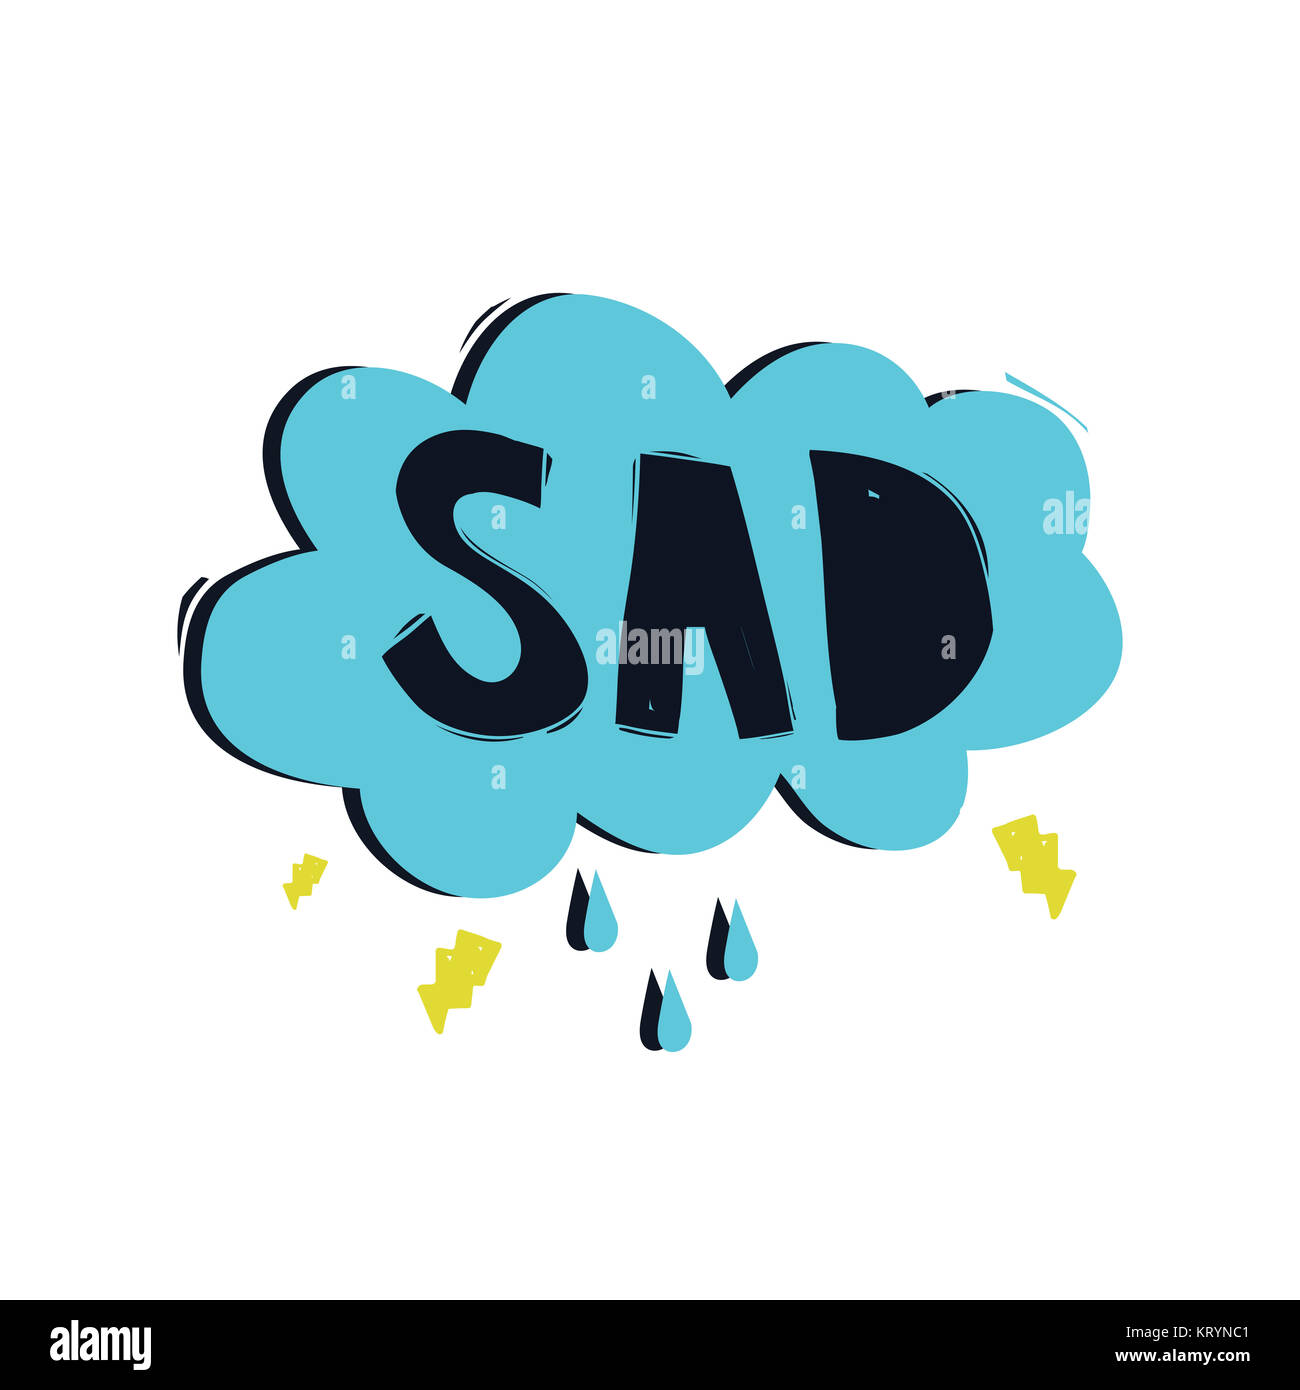 Sad. Color inspirational vector illustration Stock Photo